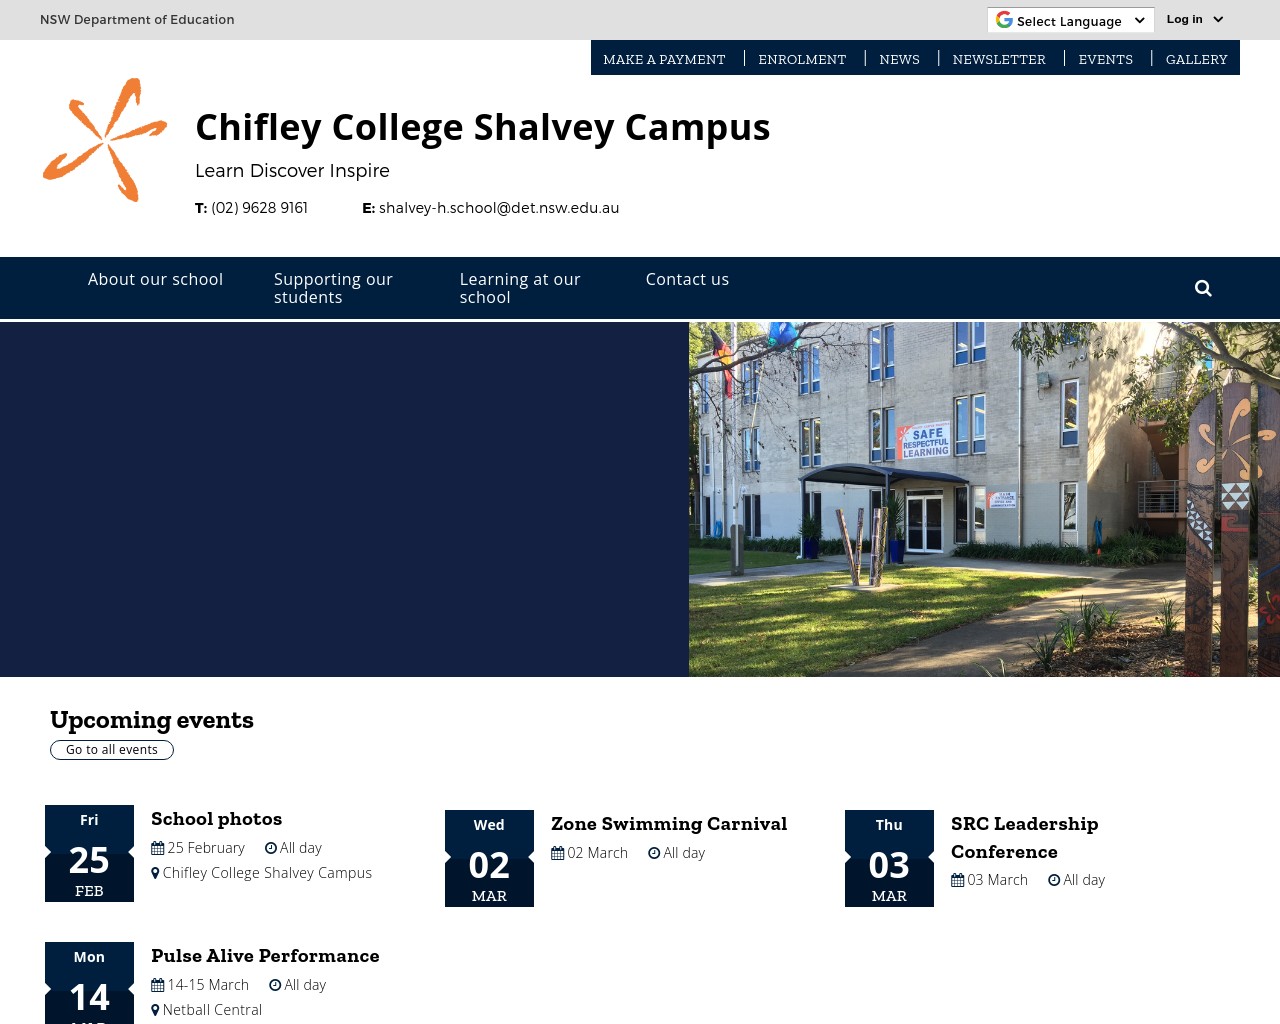 Chifley College Shalvey Campus